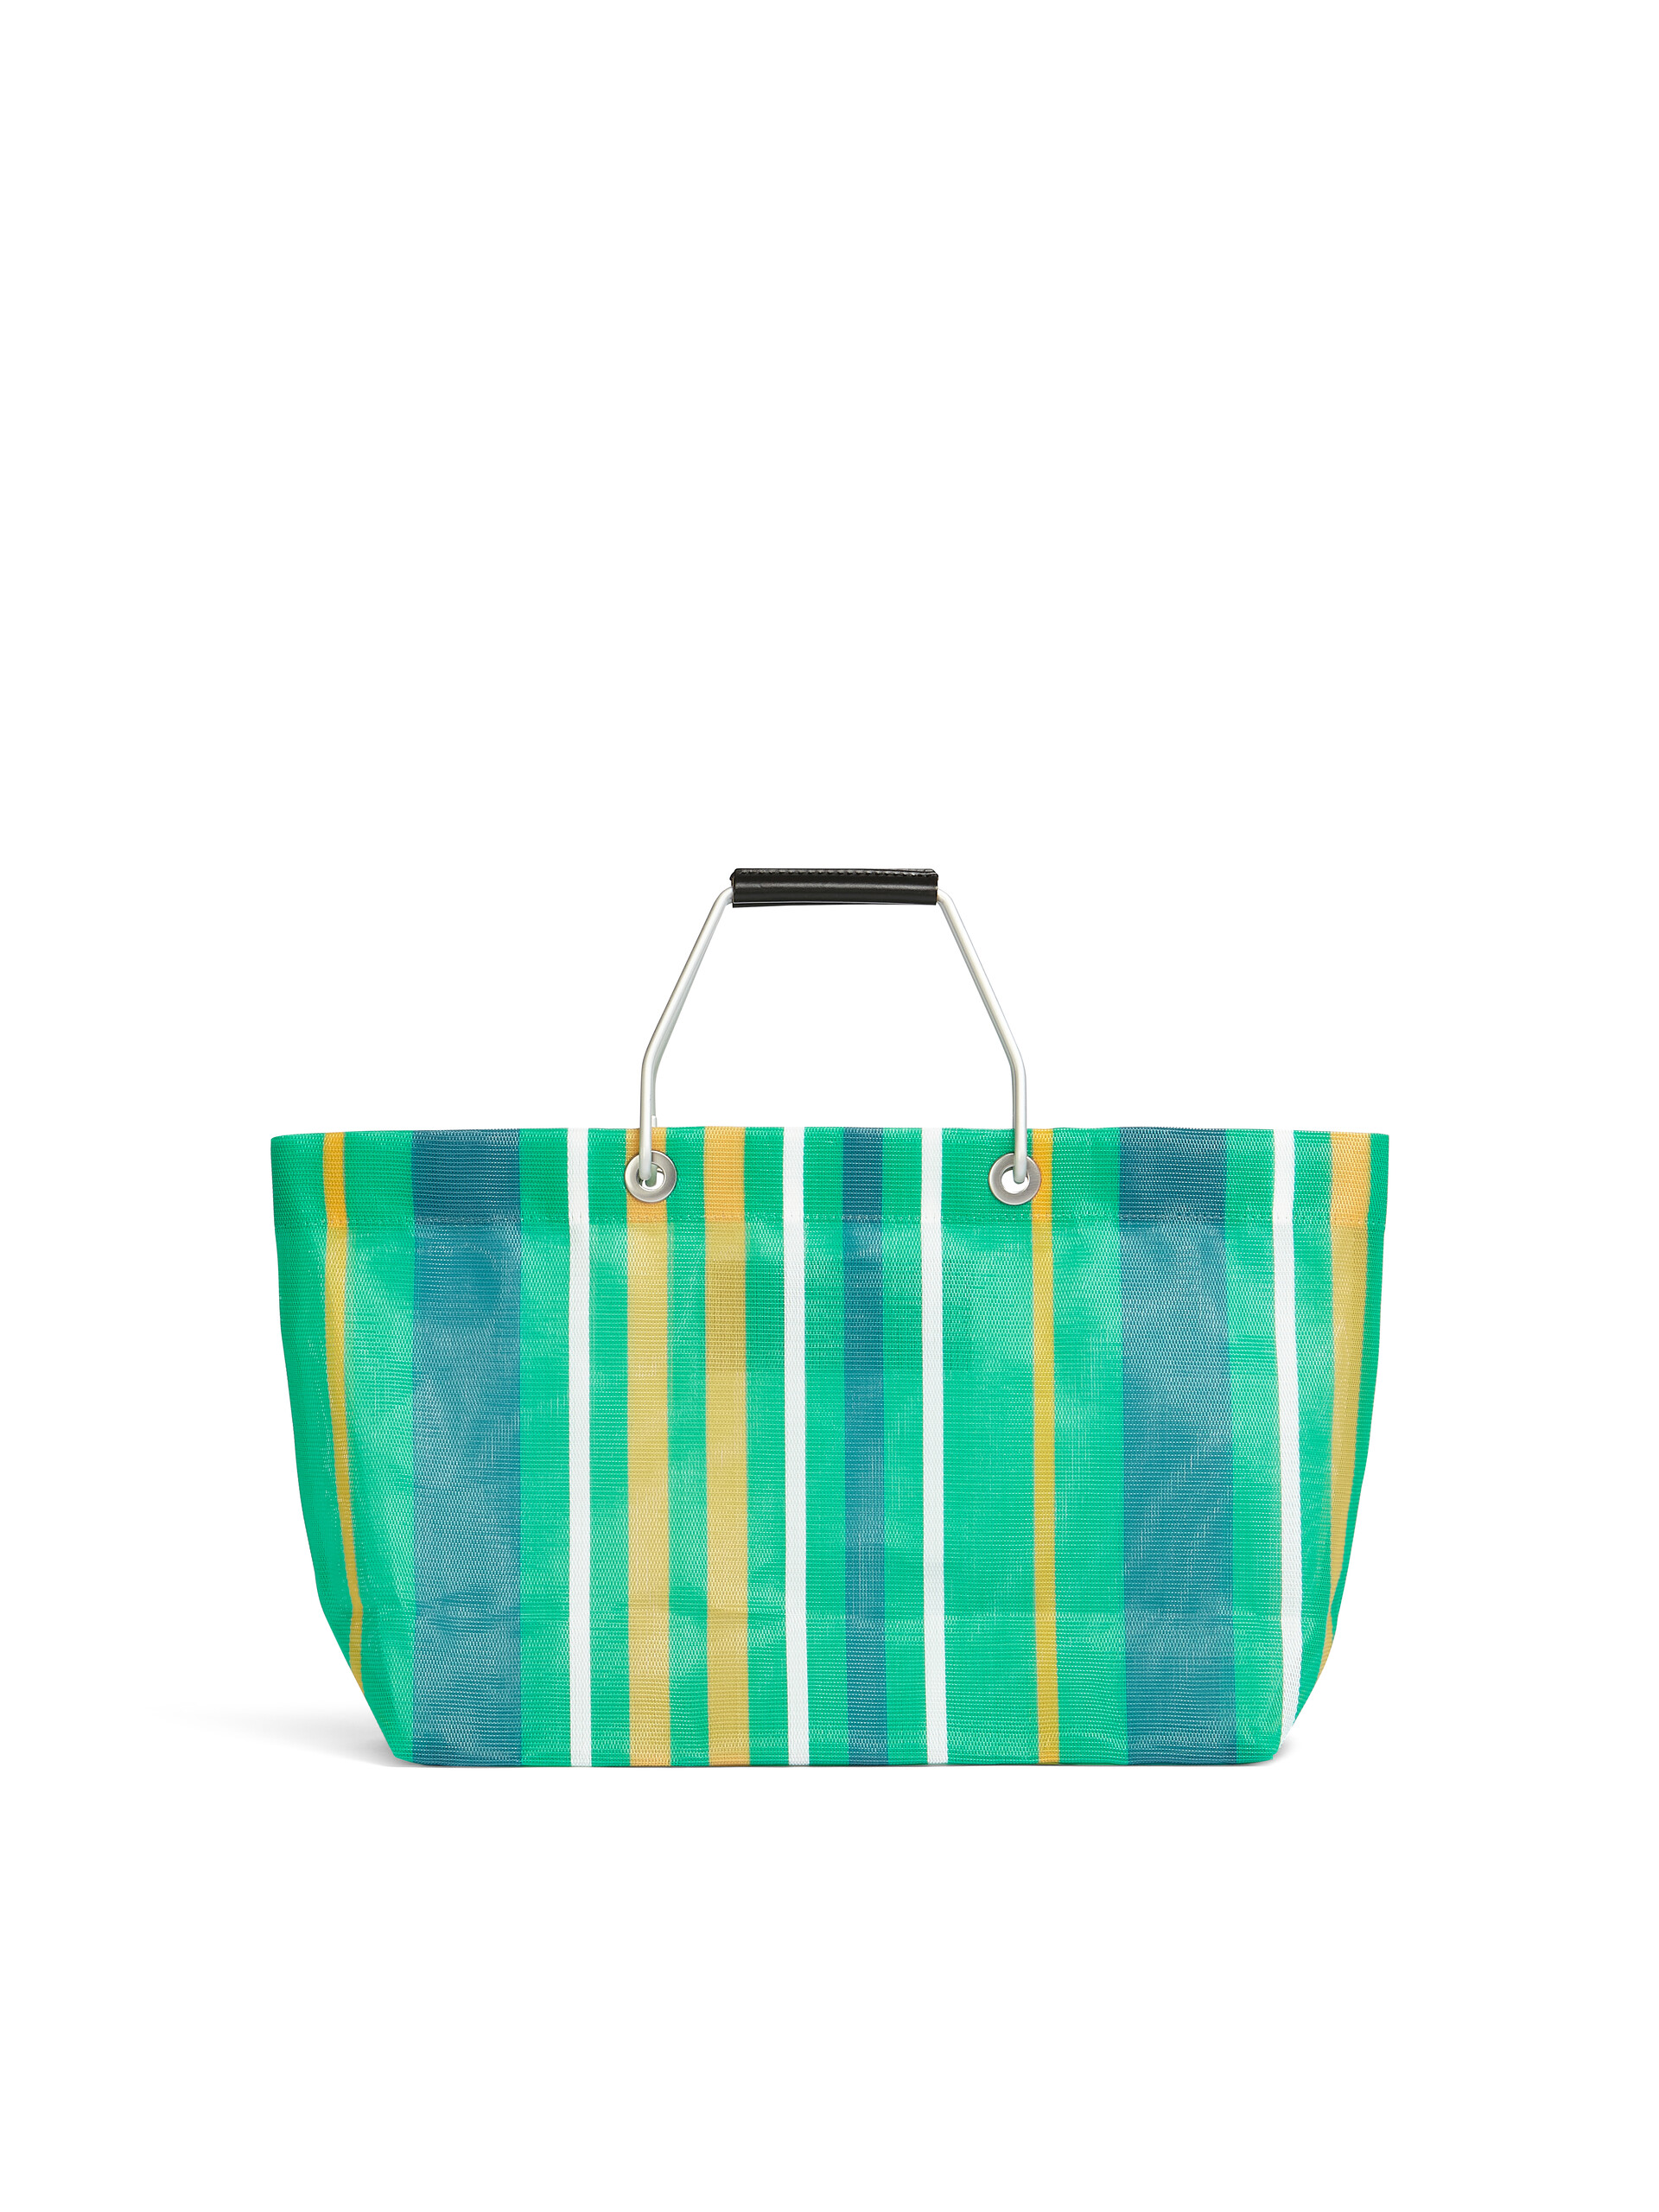 MARNI MARKET STRIPE MINI multicolor green bag - Shopping Bags - Image 3